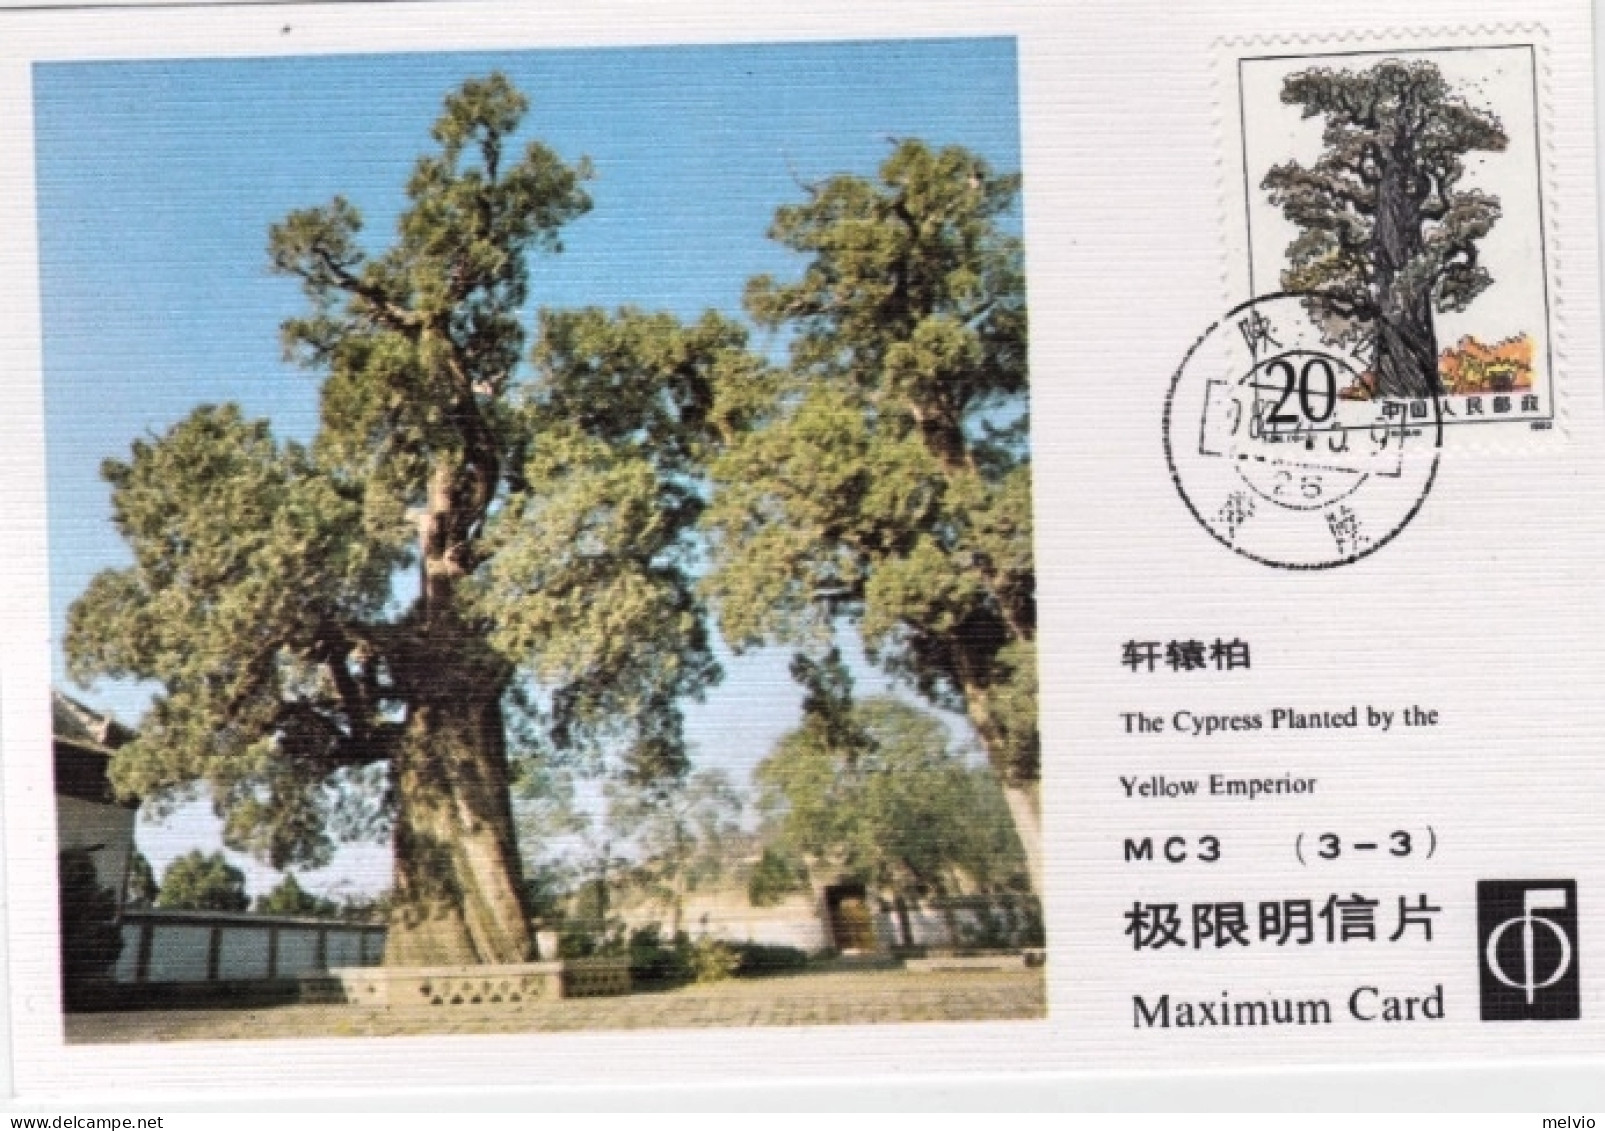 1983-Cina China MC3, Scott1947-9 Tomb Of Yellow Emperor Maximum Cards - Storia Postale